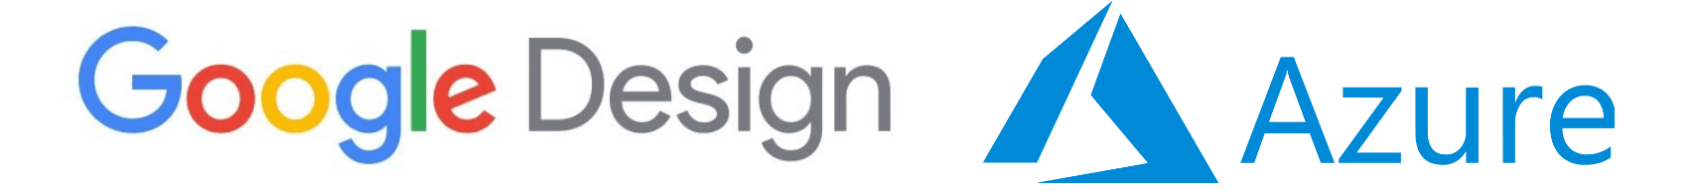 Google Design og Azure. Logo